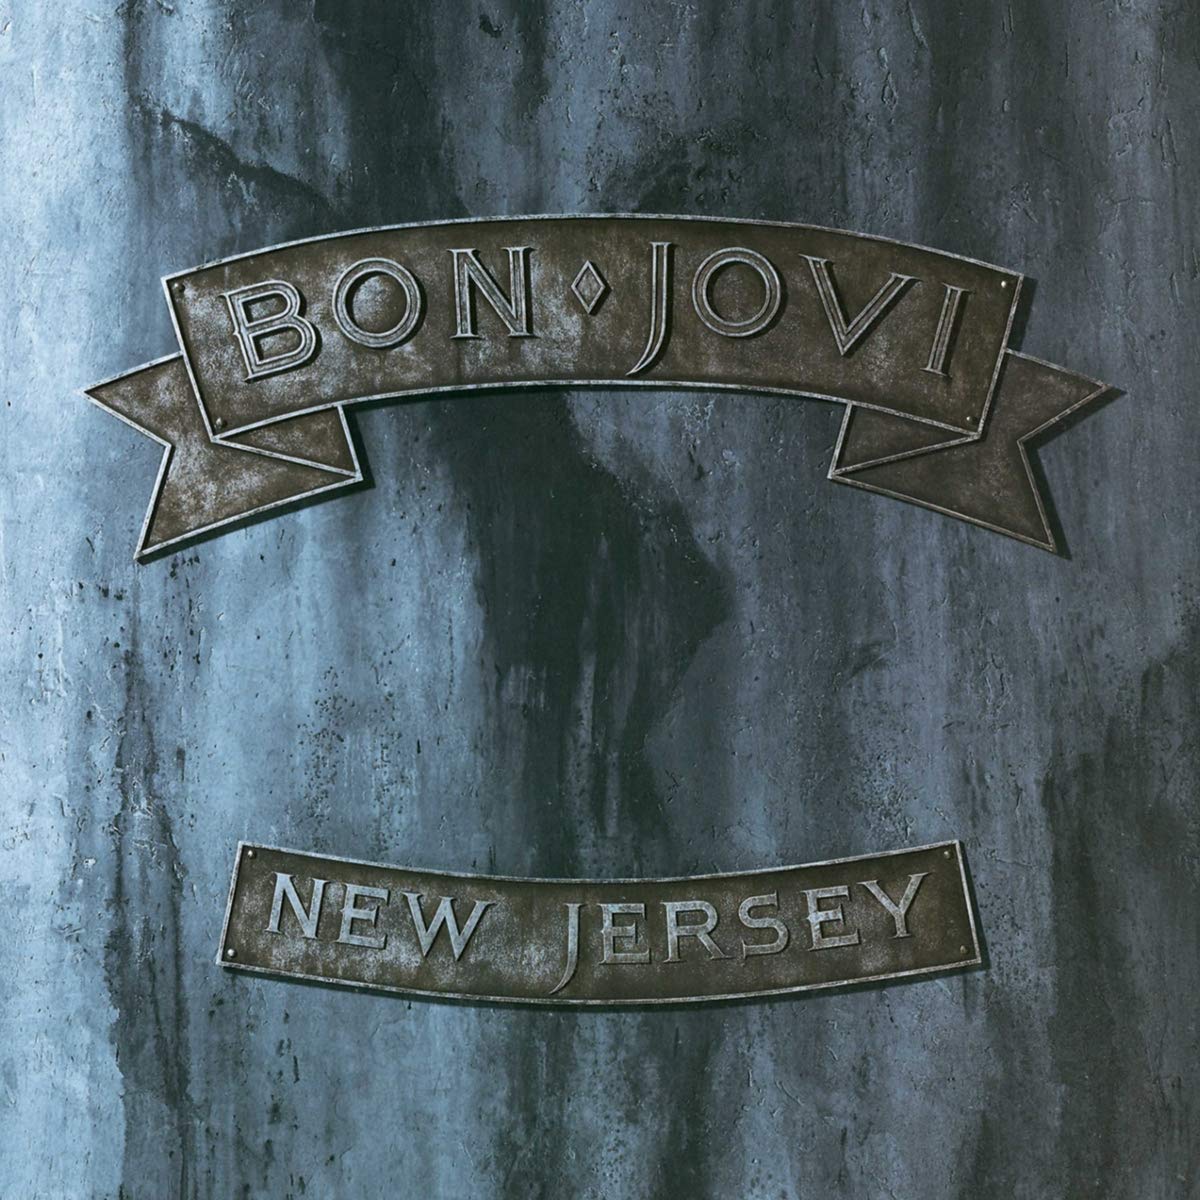 New Jersey Album Cover